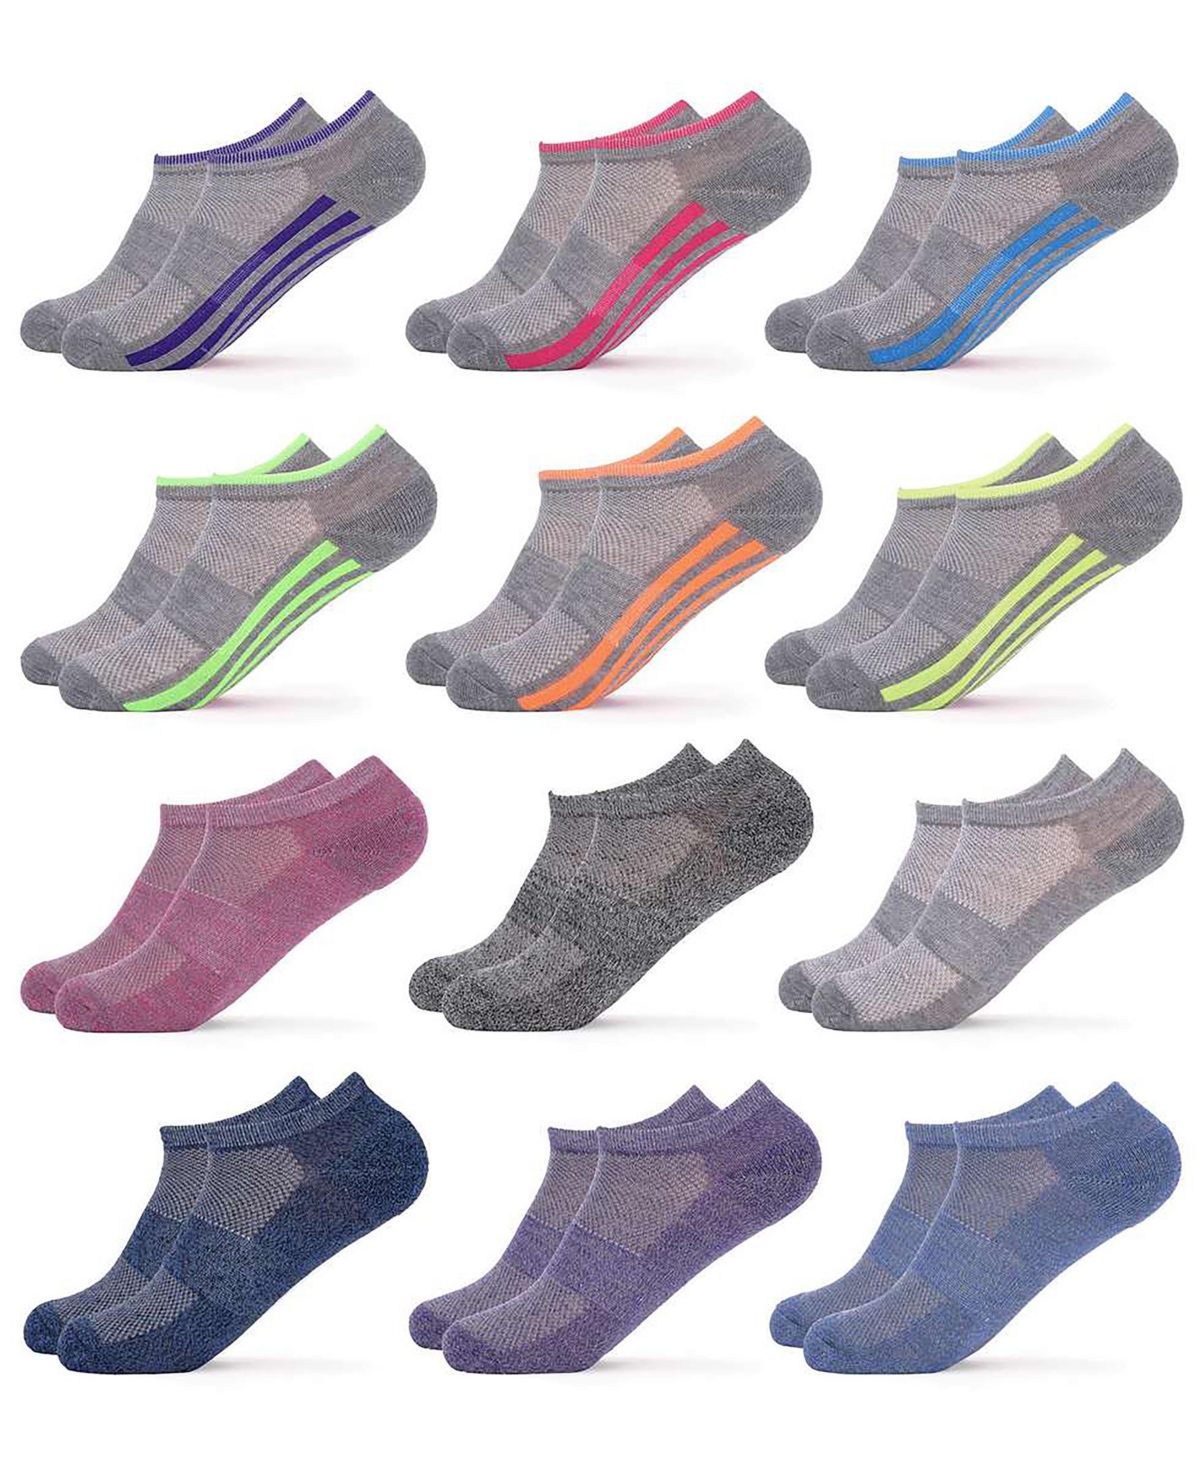 Women's No-Show Athletic Sport Socks 12 Pack - Neon/grey